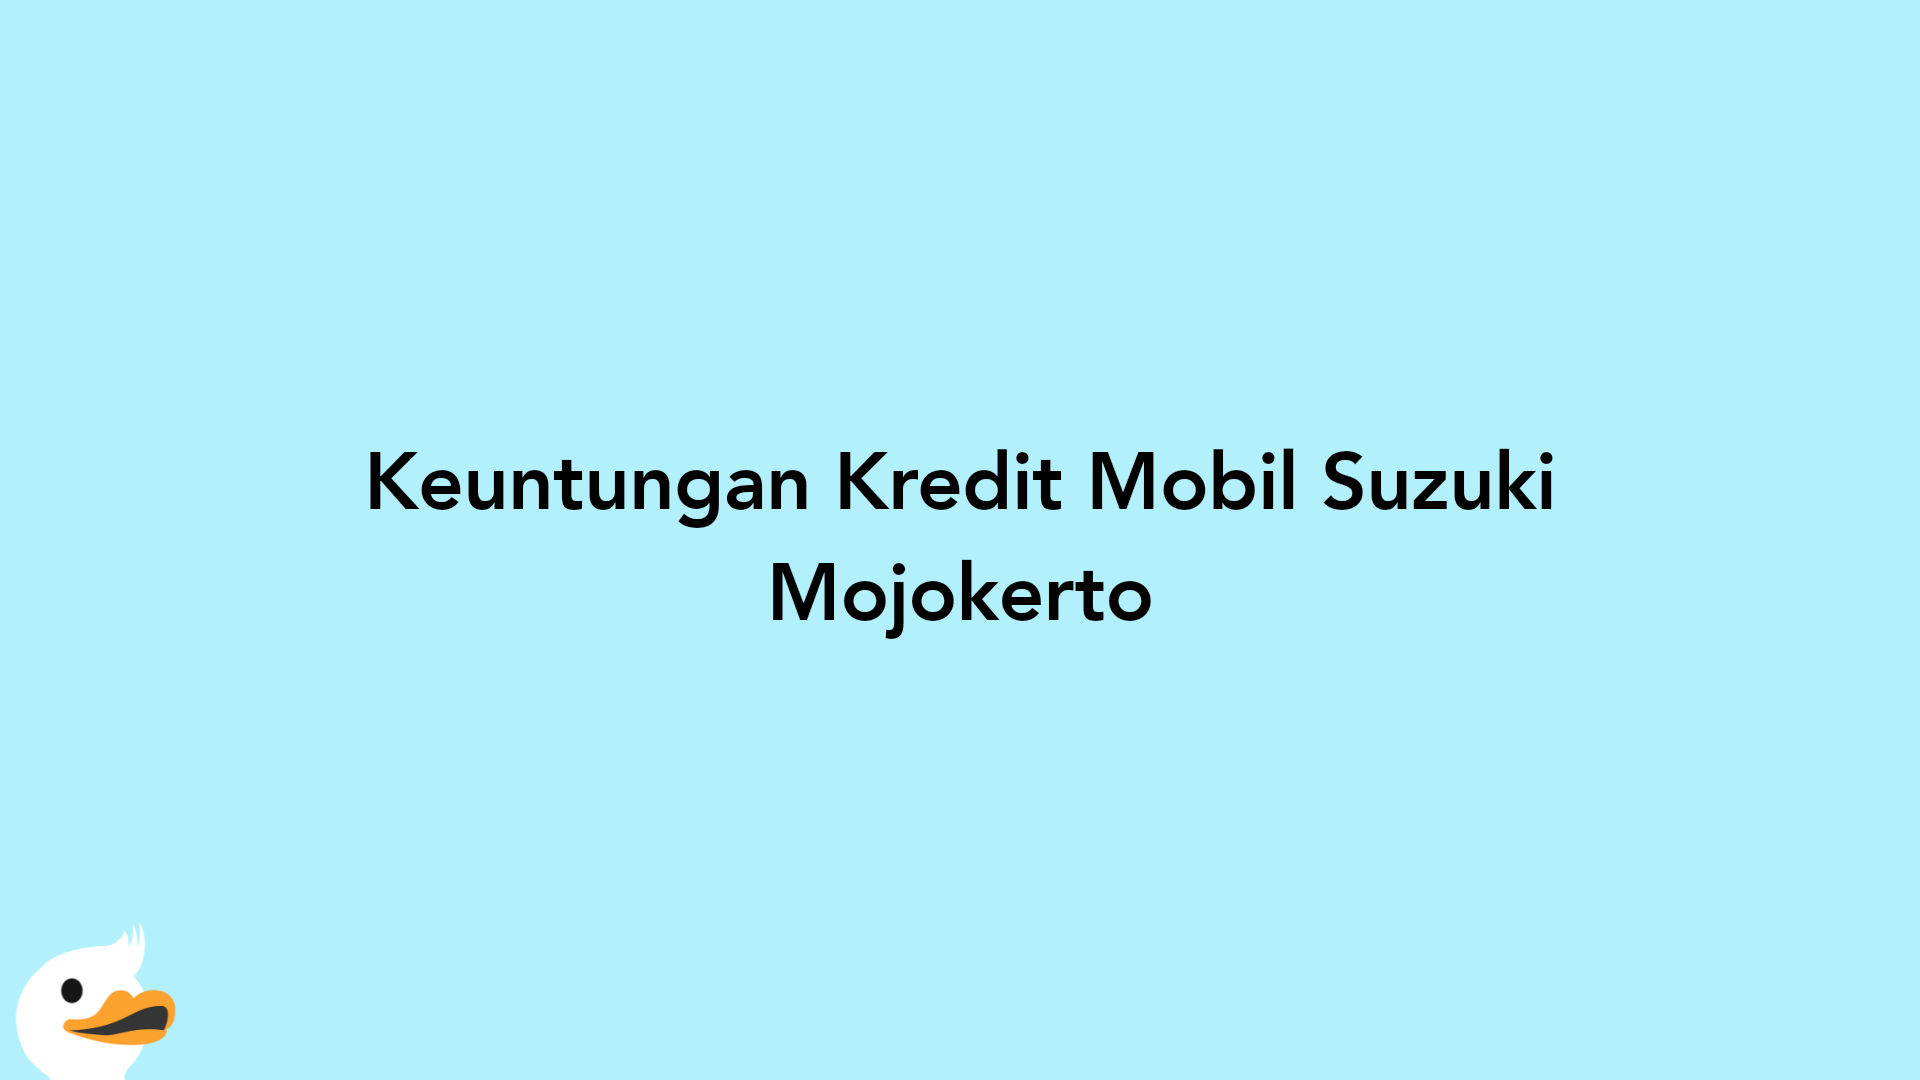 Keuntungan Kredit Mobil Suzuki Mojokerto